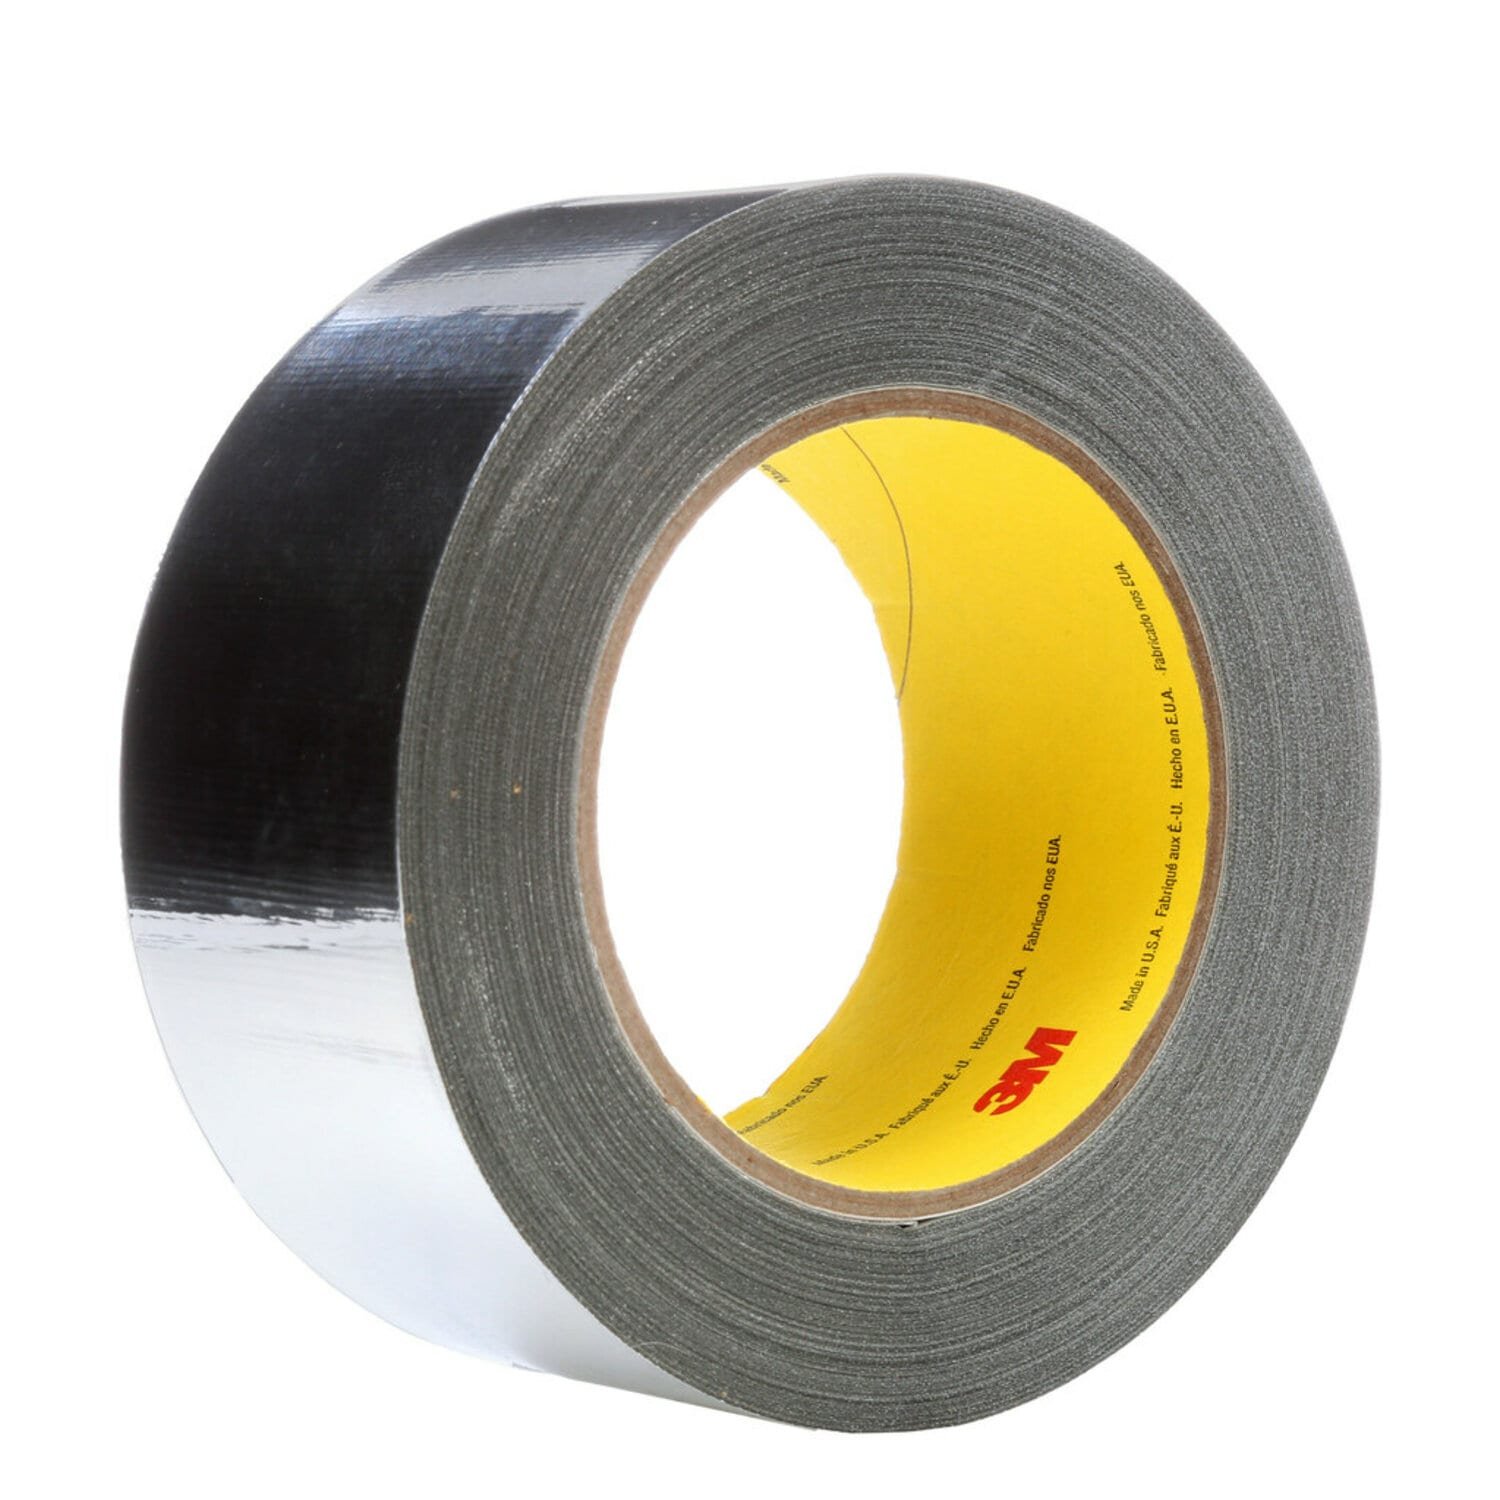 7010535609 - 3M High Temperature Aluminum Foil Glass Cloth Tape 363, Silver, 3 in x
36 yd, 7.3 mil, Roll